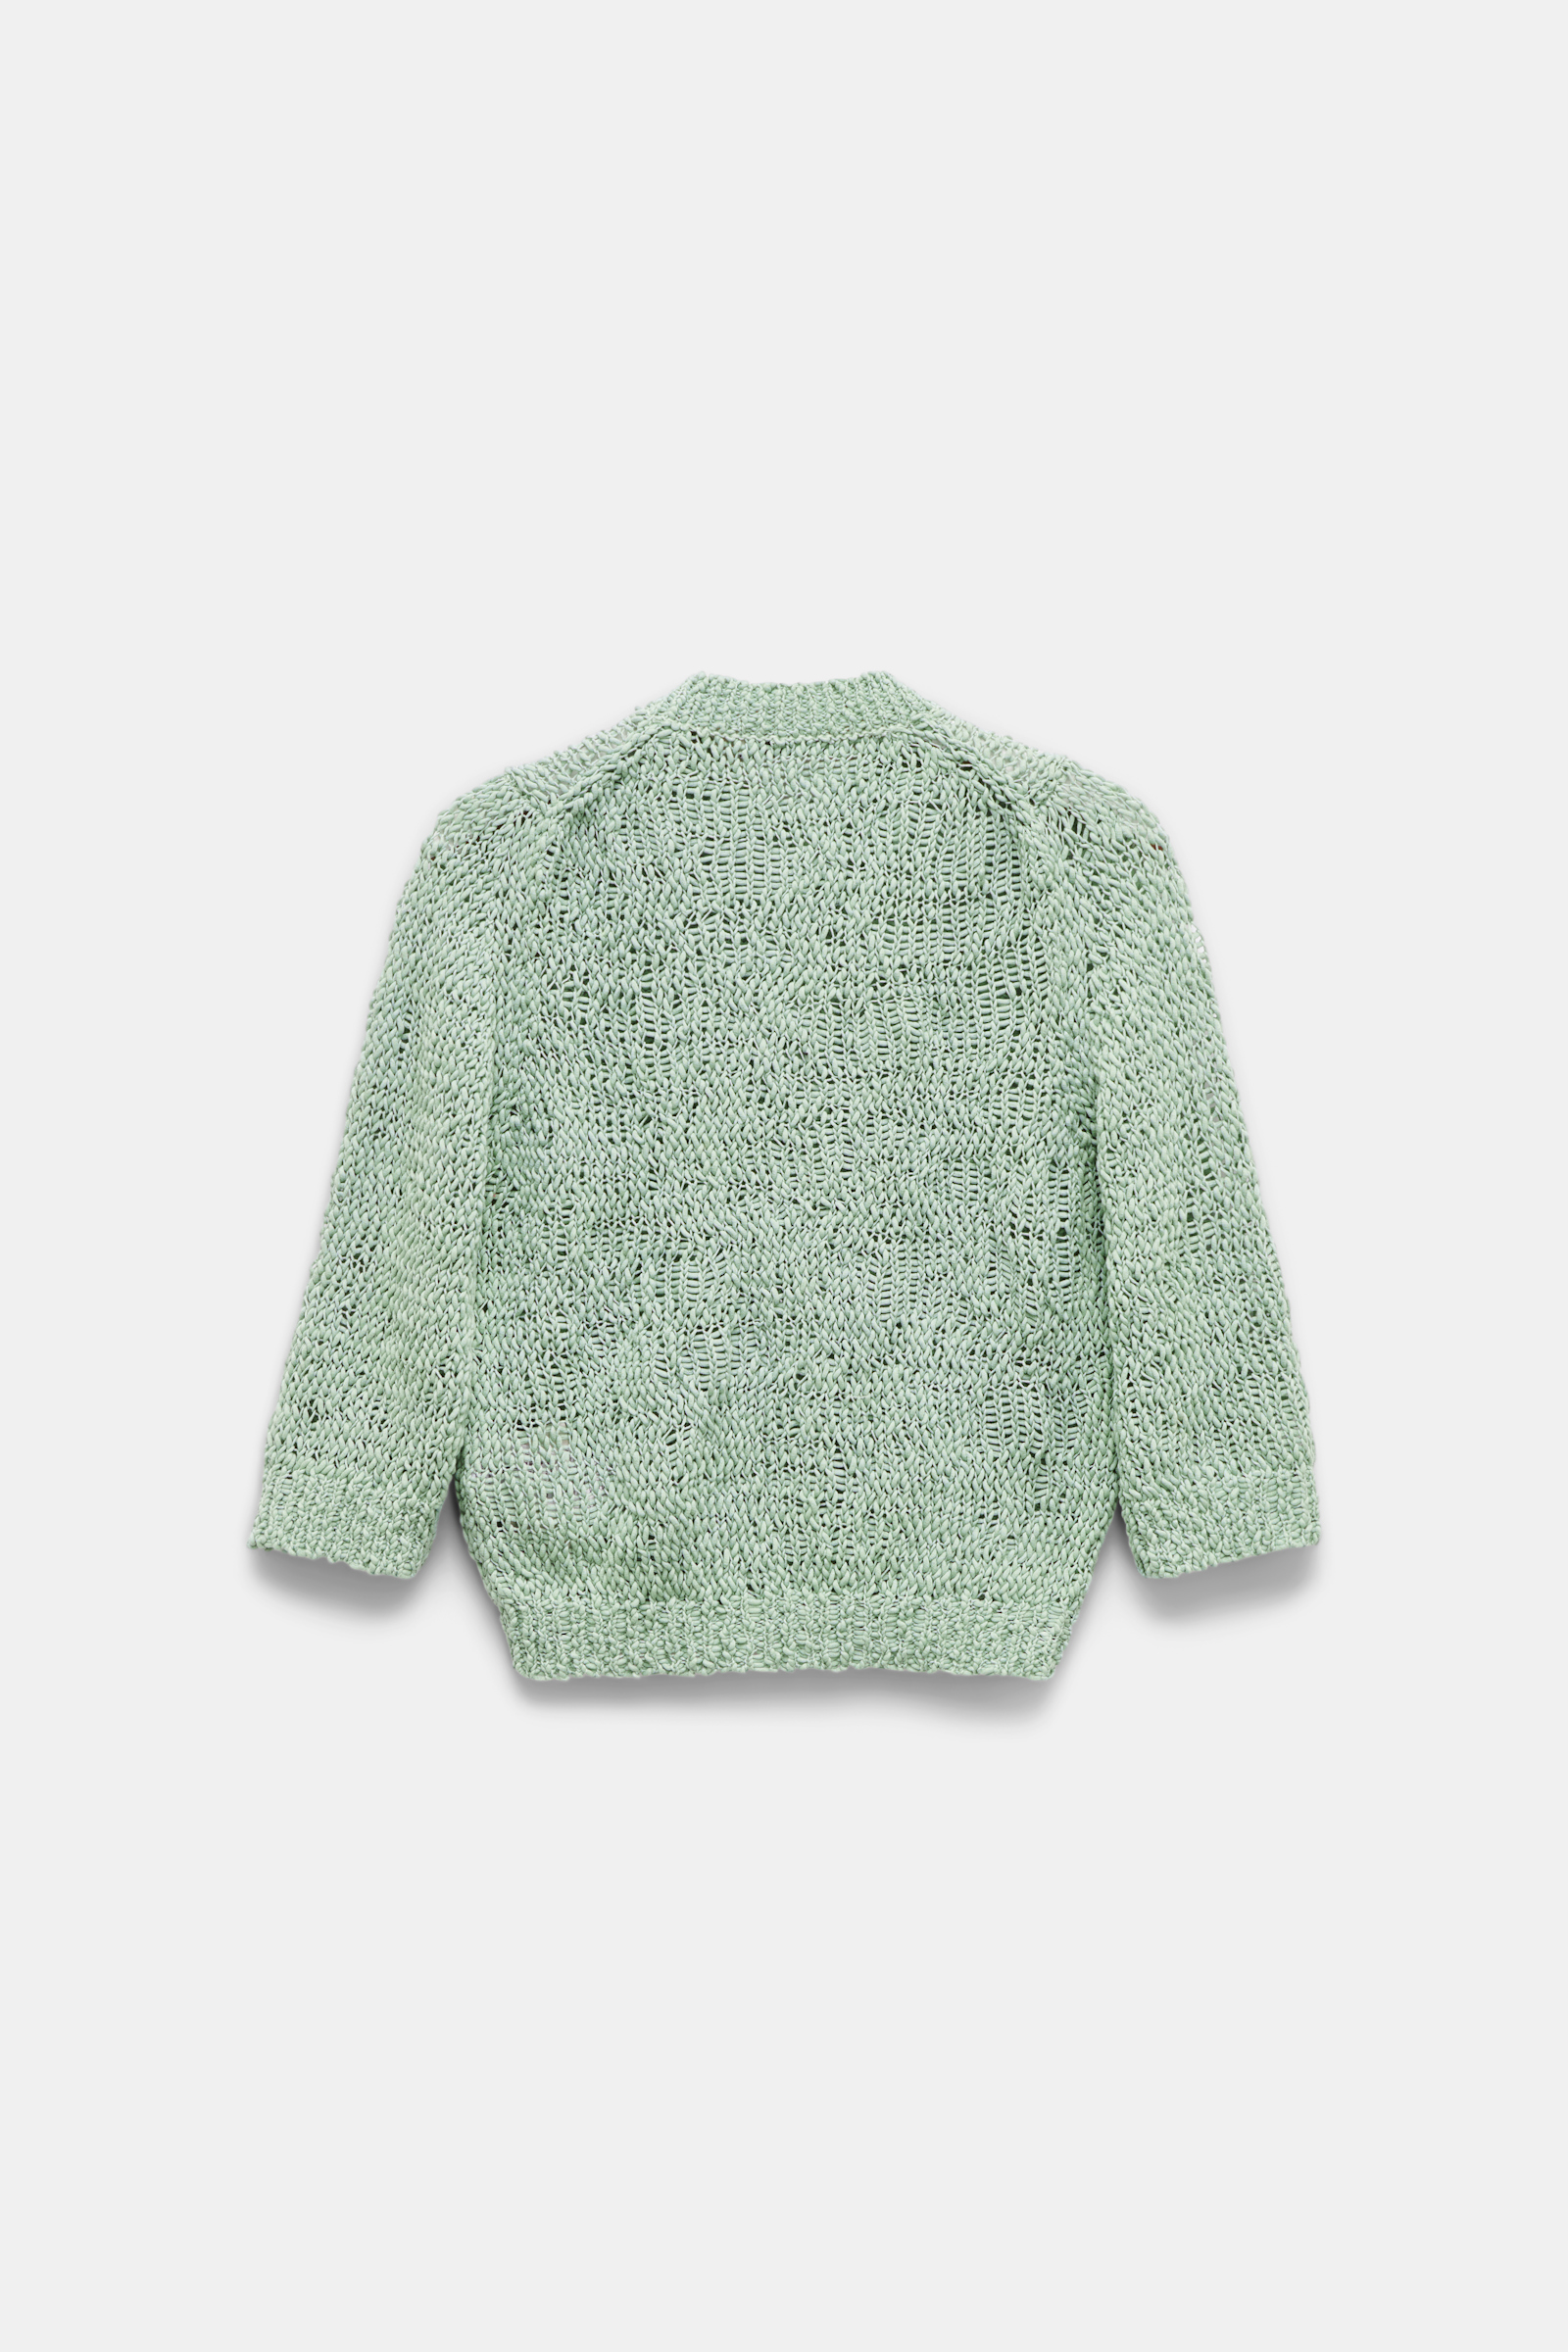 Dorothee Schumacher Textural knit cotton cardigan pale green